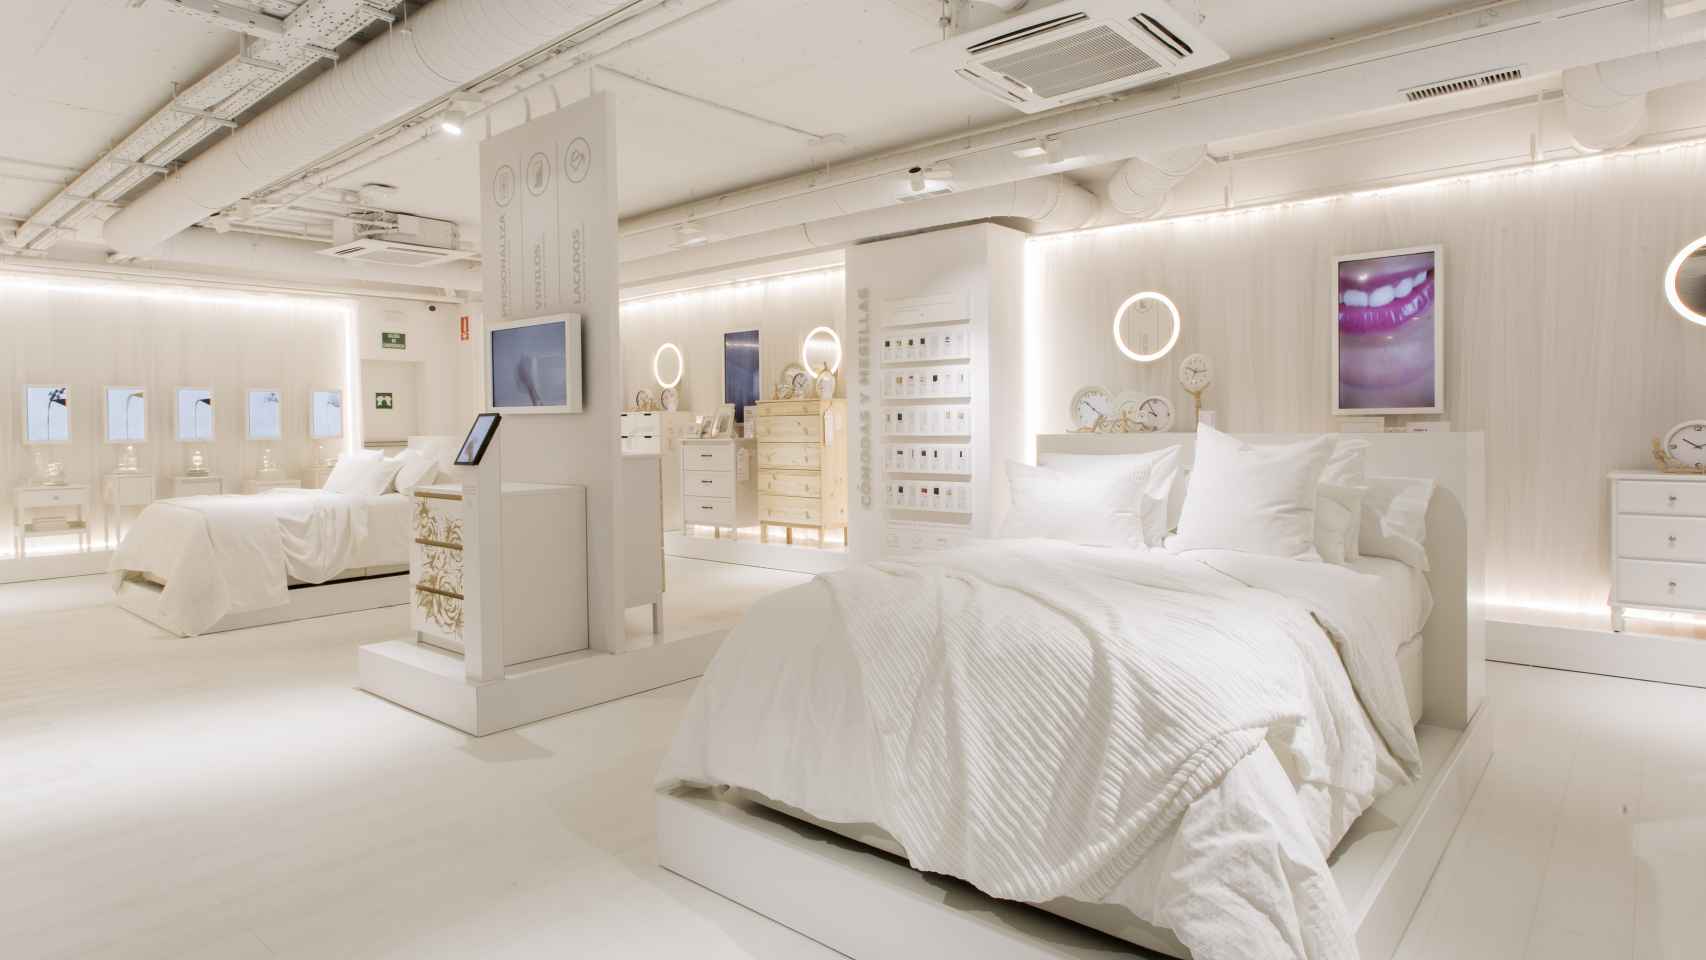 La nueva tienda de Ikea en la calle Serrano de Madrid